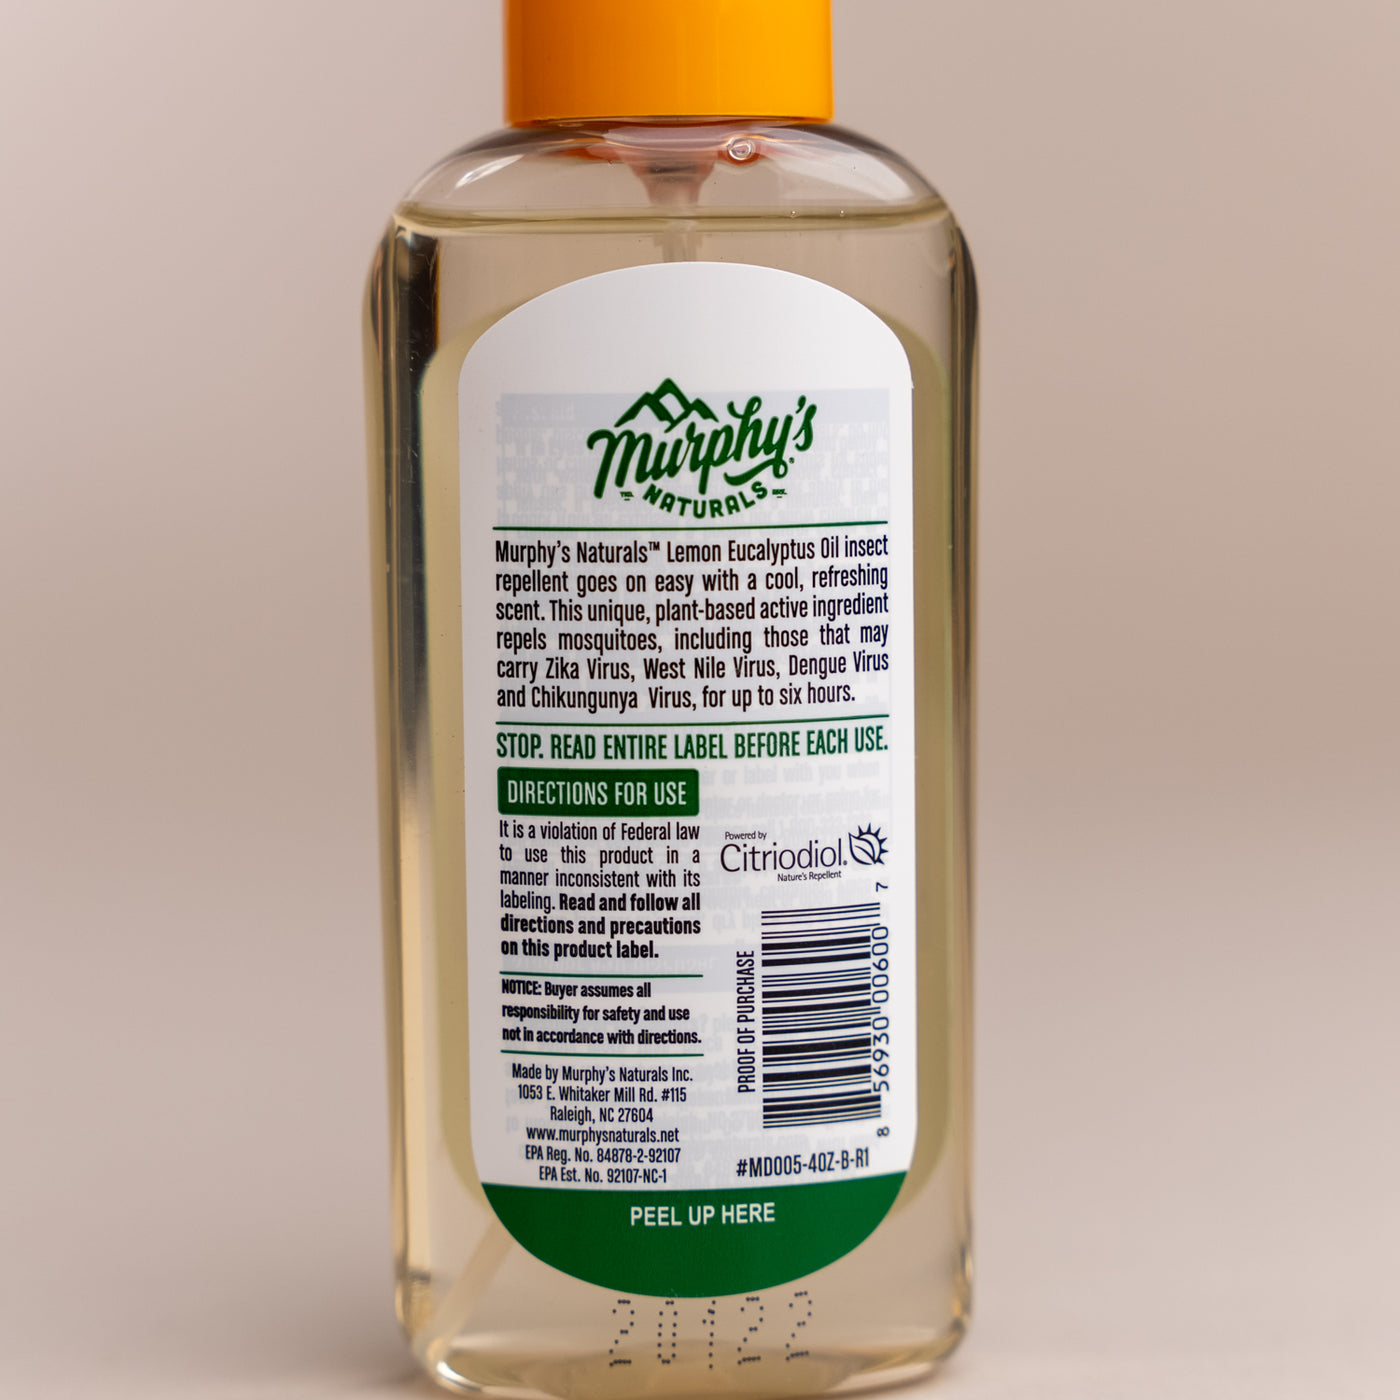  Murphy's Oil Soap Liquid Wood Cleaner, 32 Ounce